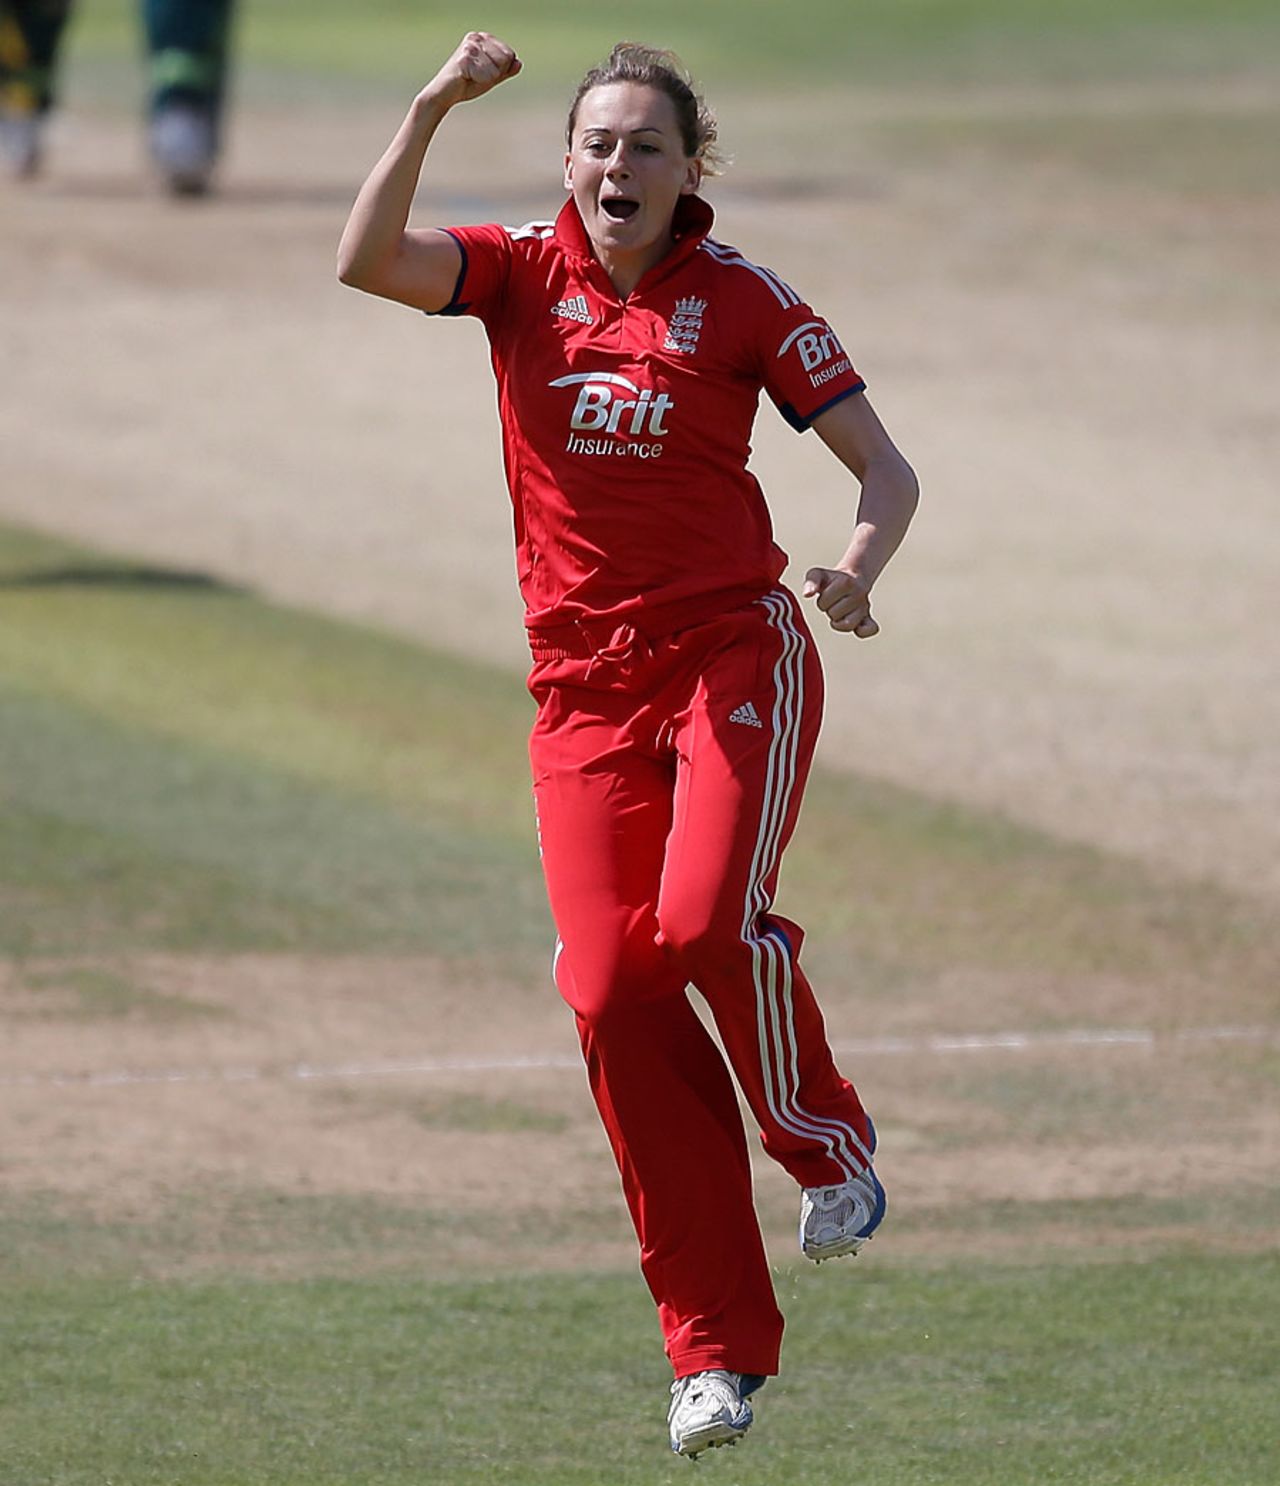 Laura Marsh celebrates a wicket, England v Australia, 1st women's ODI, Lord's, August 20, 2013 